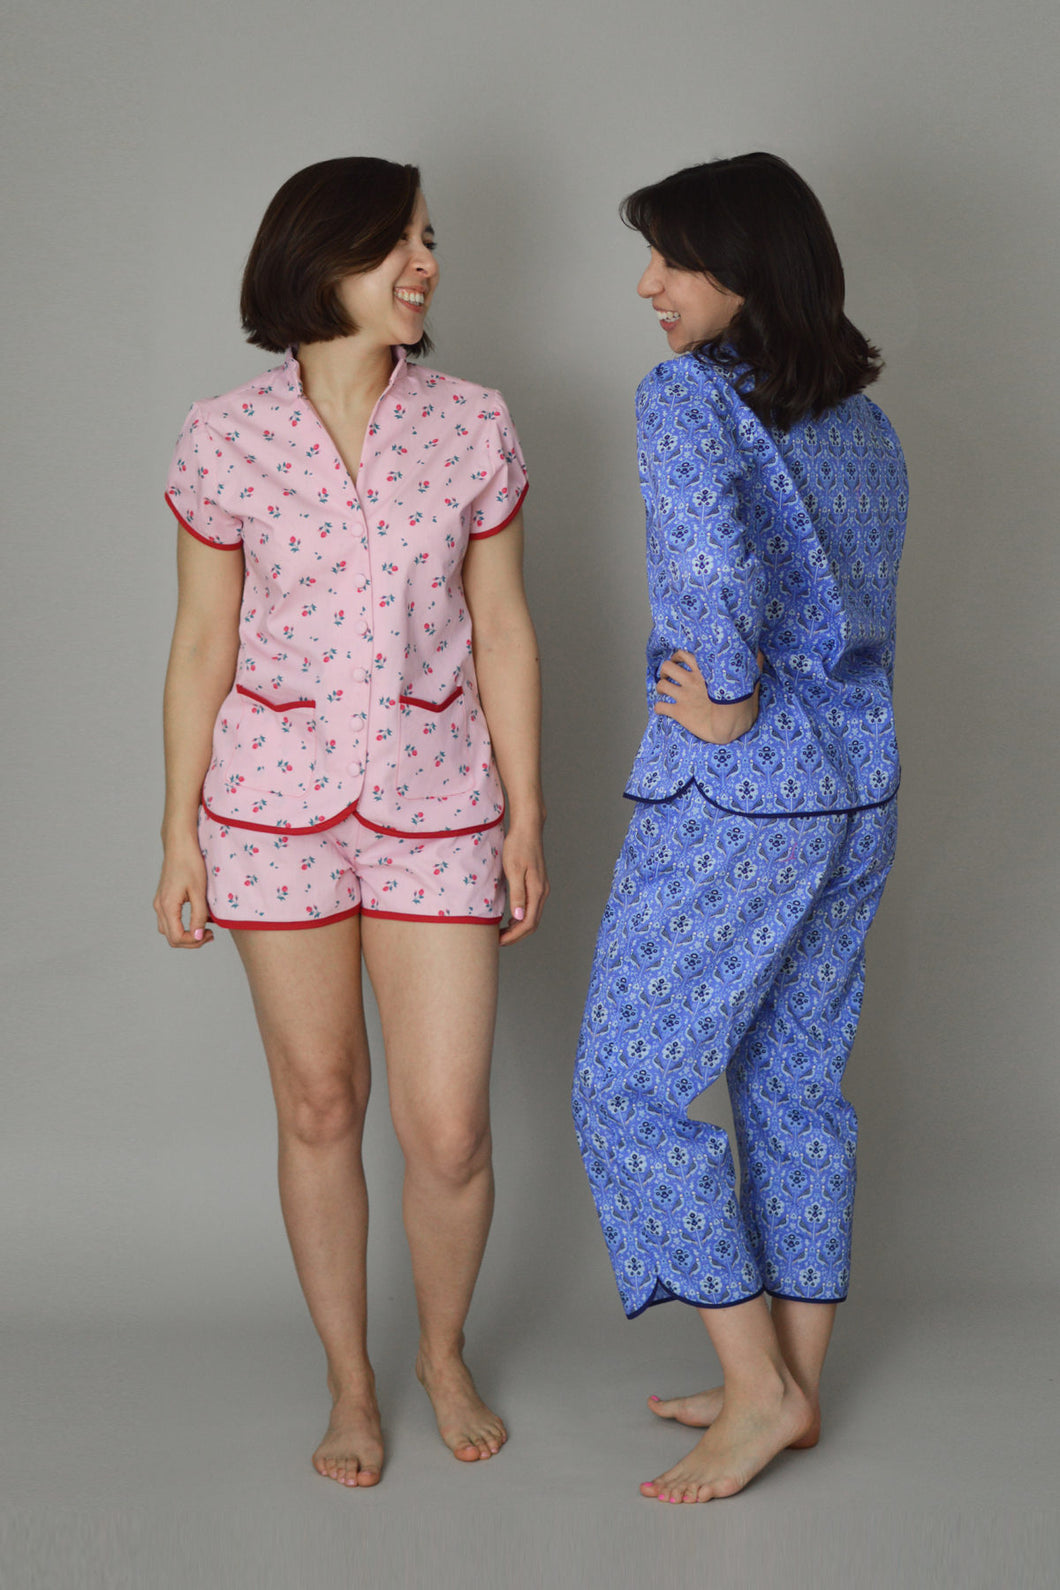 A pyjama look in Notting Hill - polienne